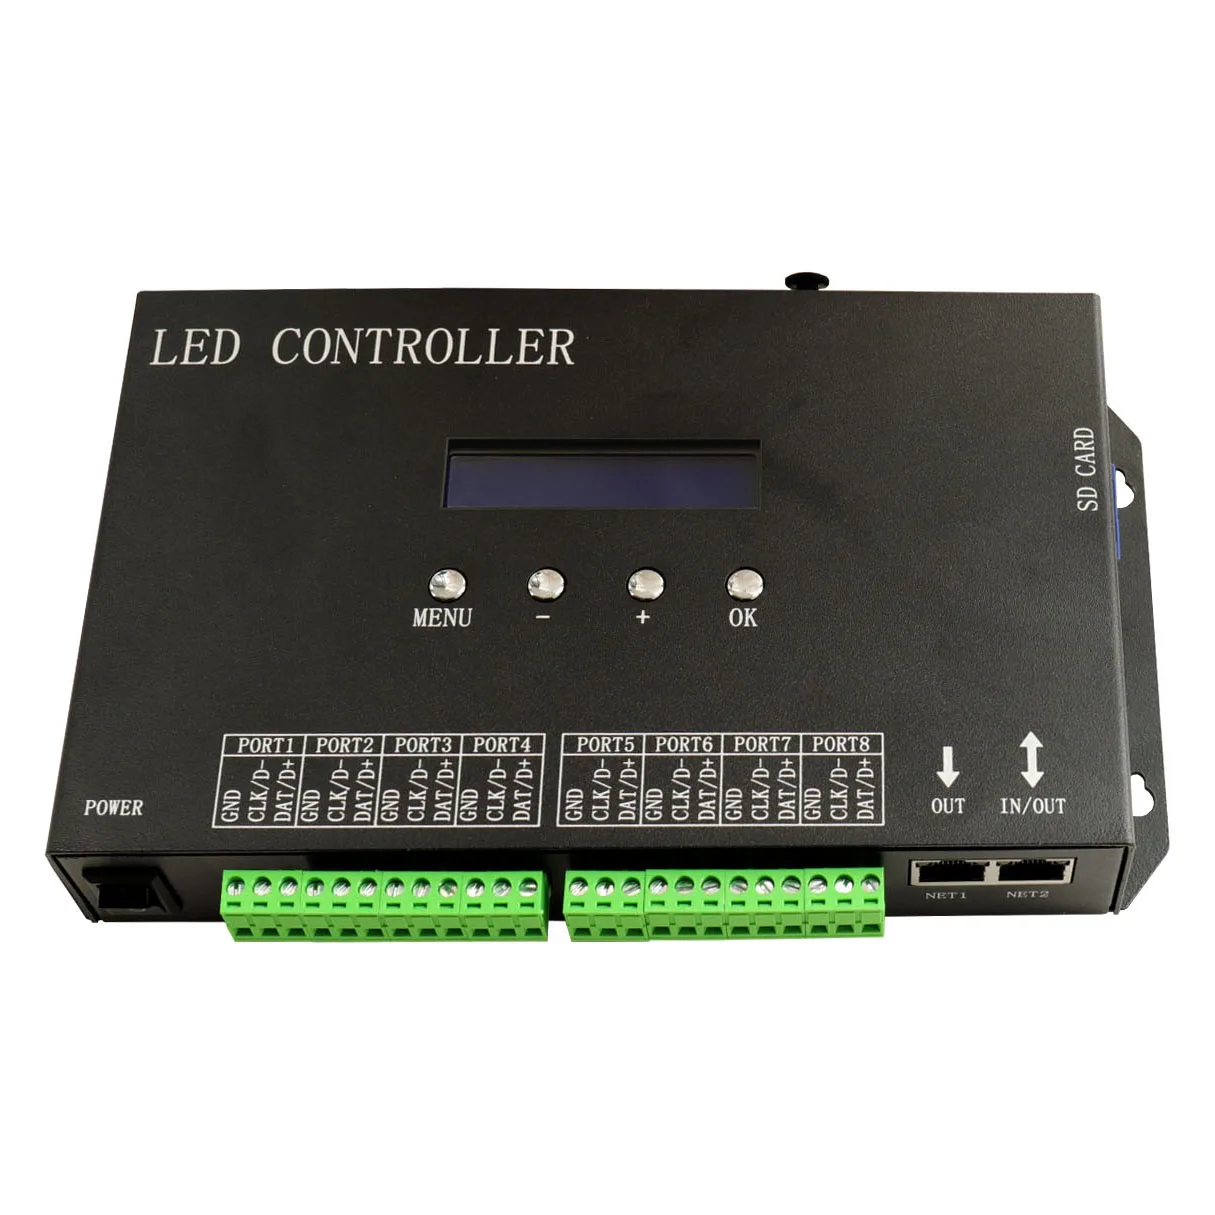 led 8 ports artnet controller,32 universes 5440 RGB pixels,4096 RGBW pixels,online to PC or offline SD card,DMX512 6 channels